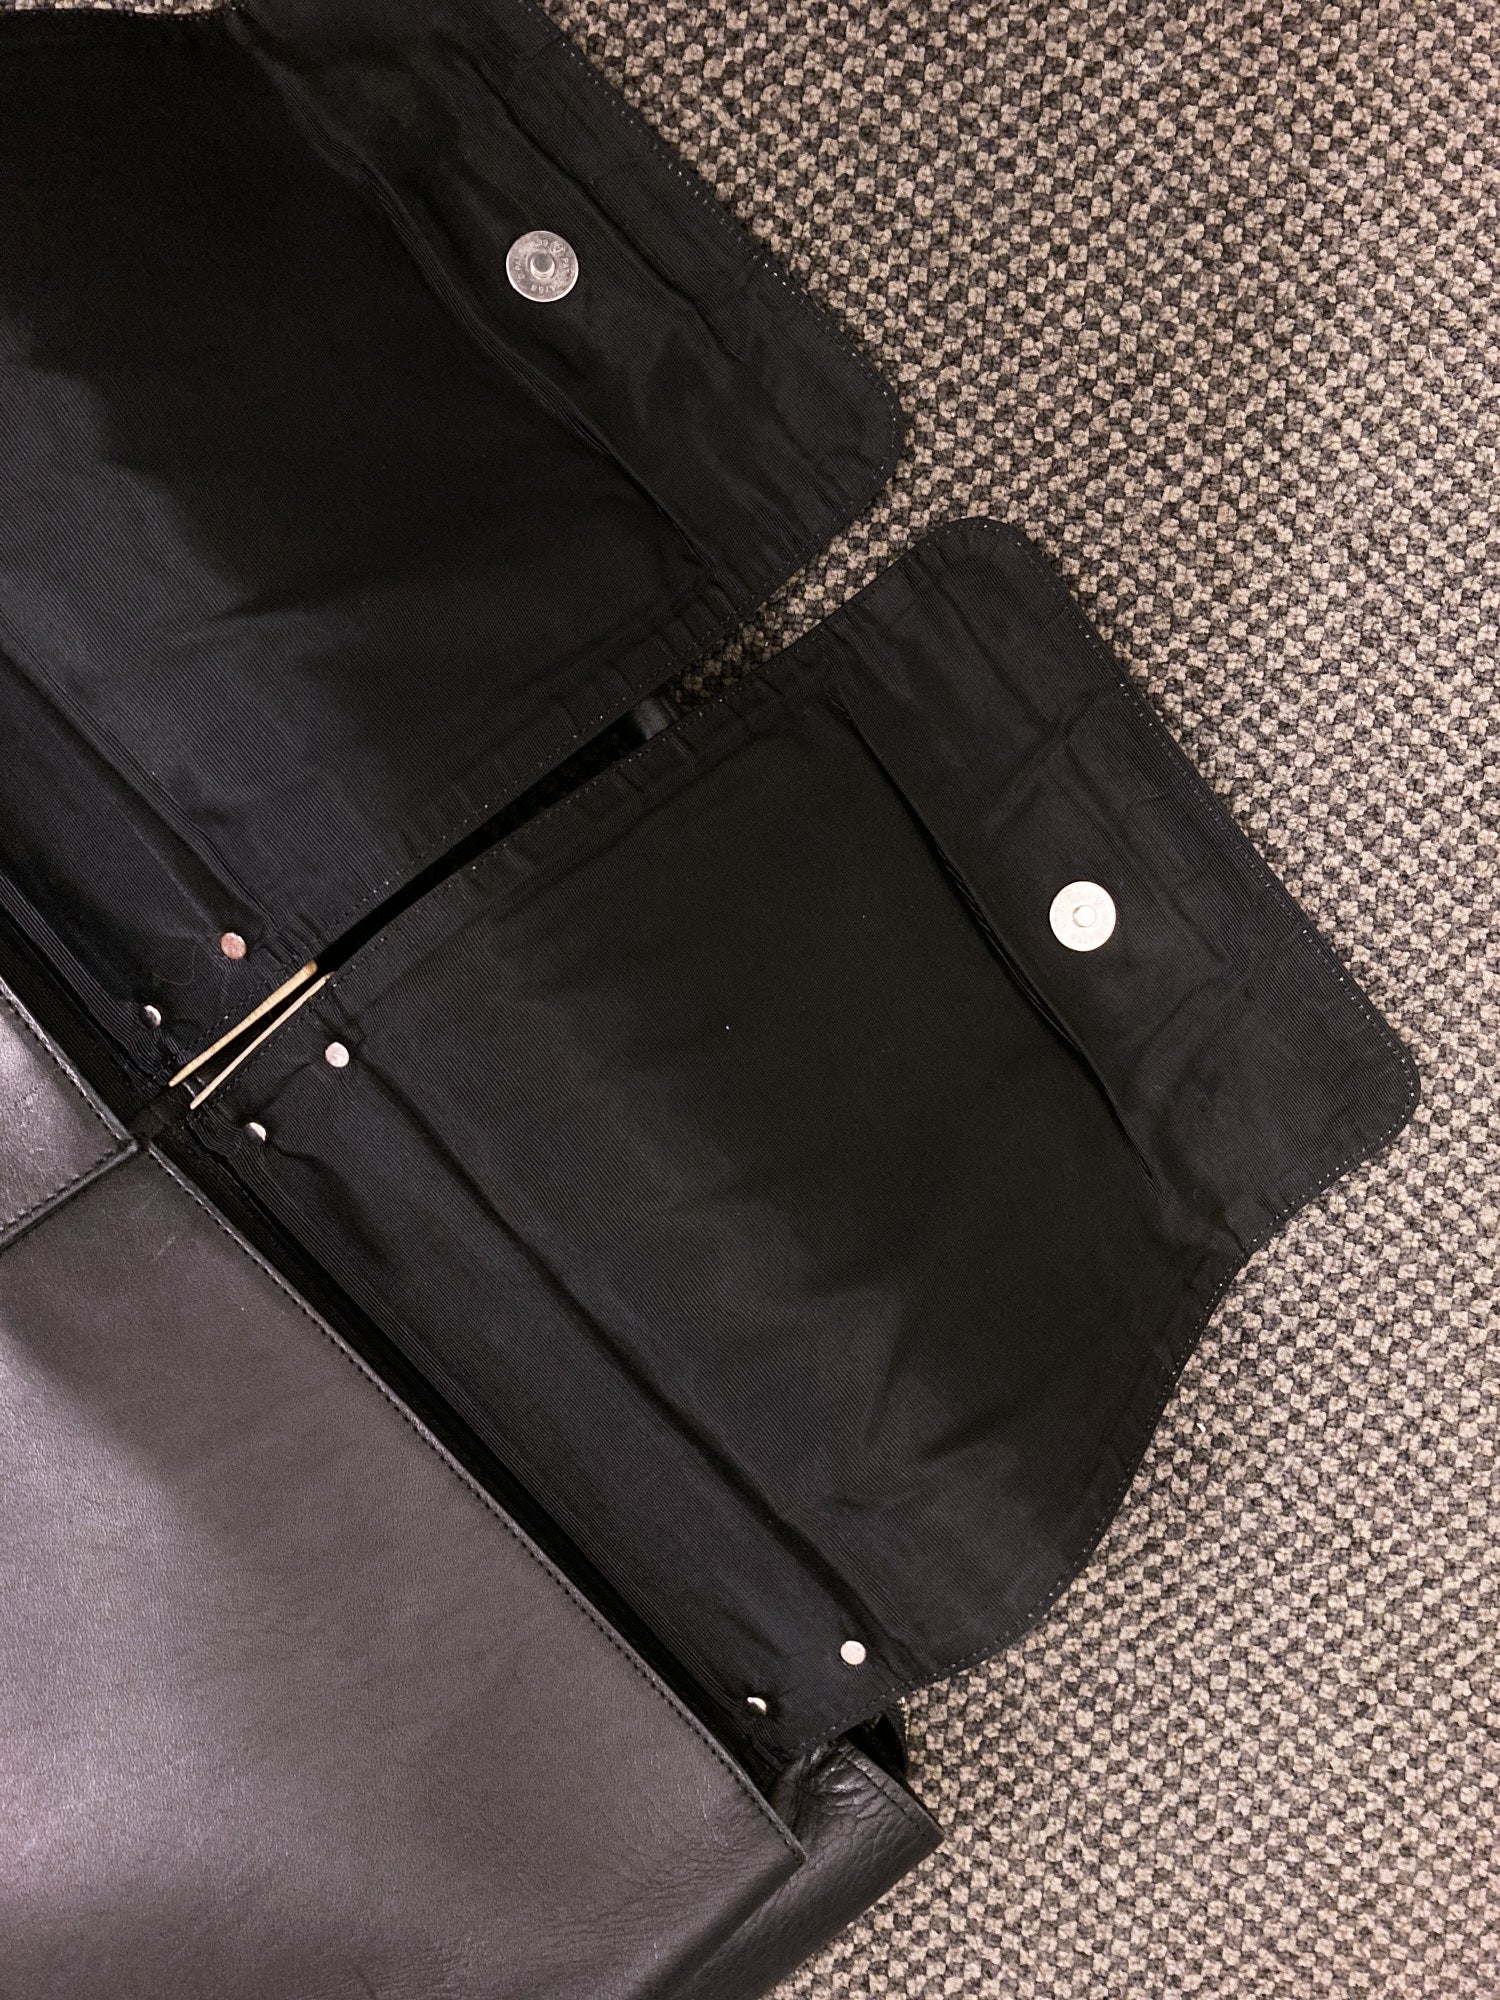 Masaki Matsushima Homme black leather briefcase with wooden blocks